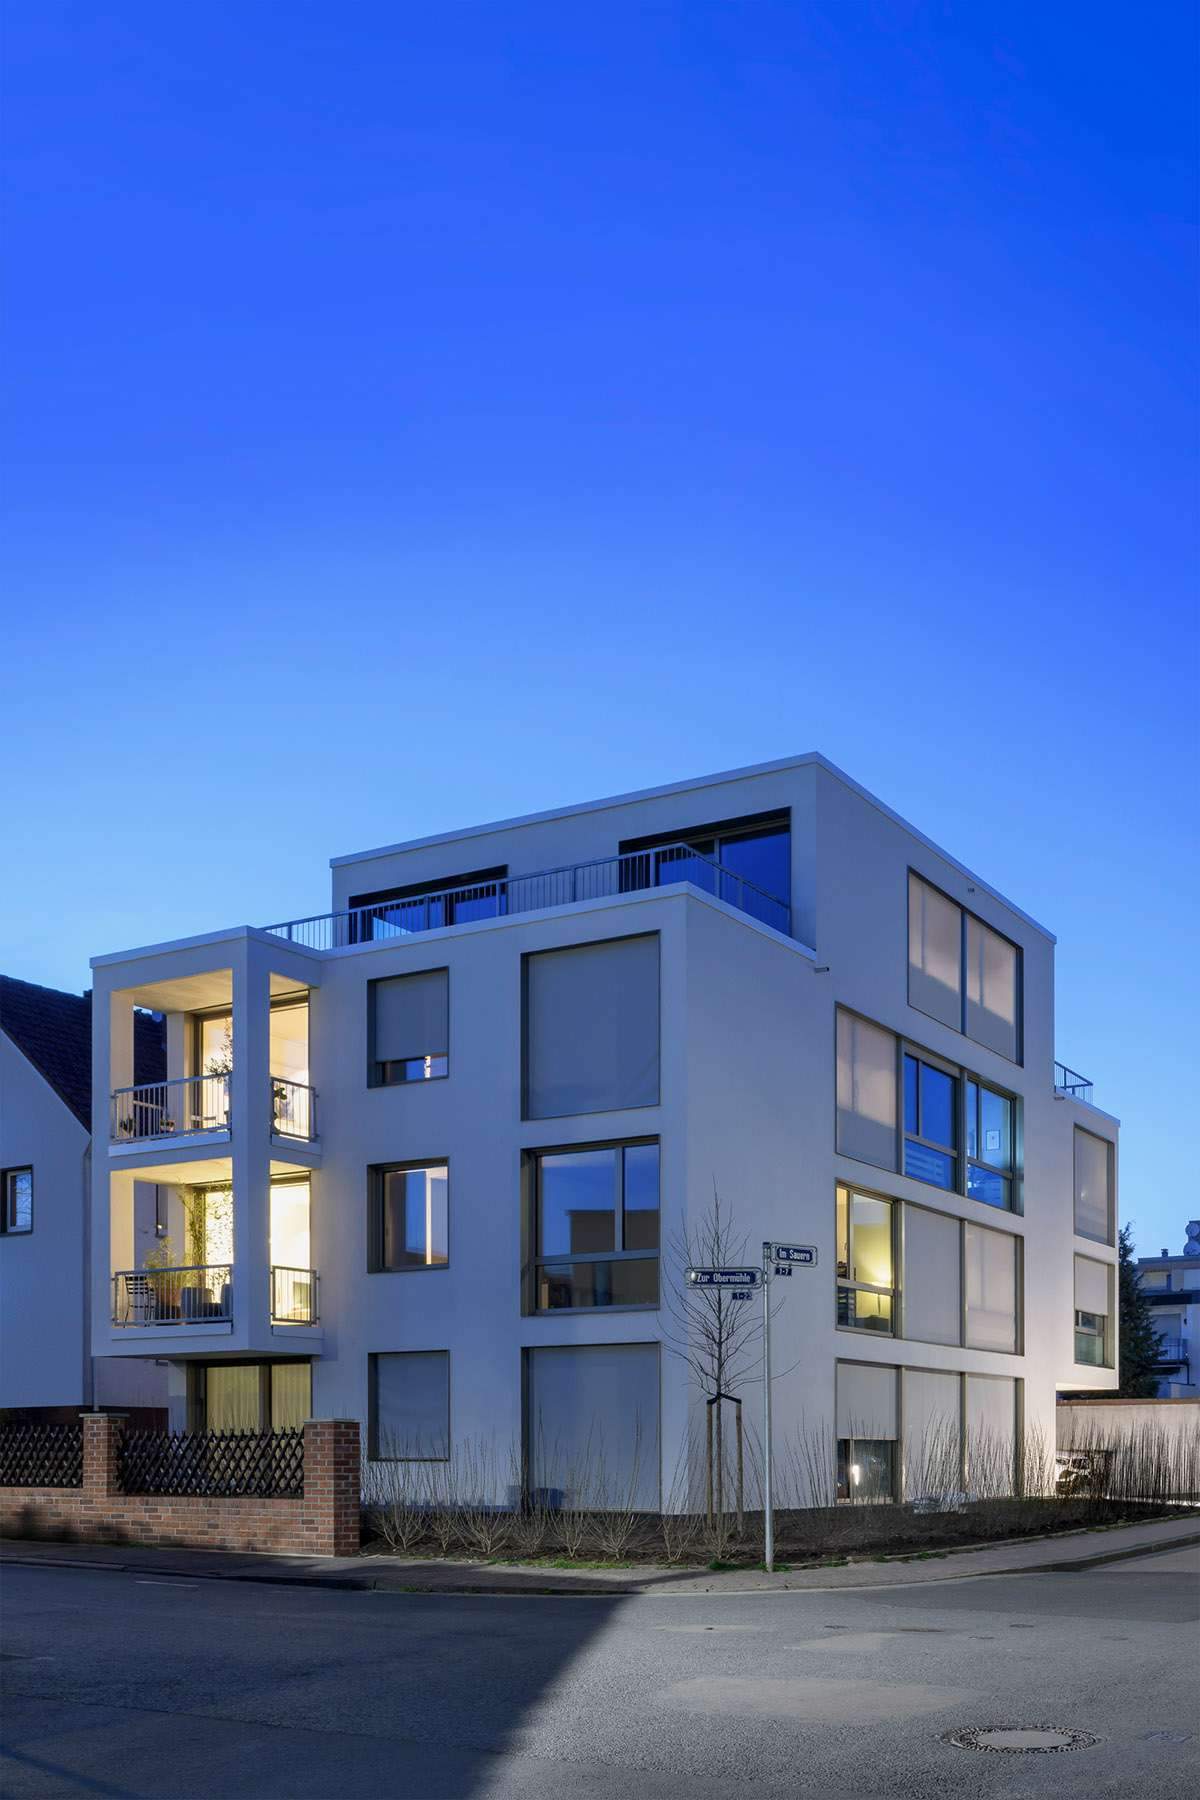 Completion of BV Mehl’s house in Frankfurt